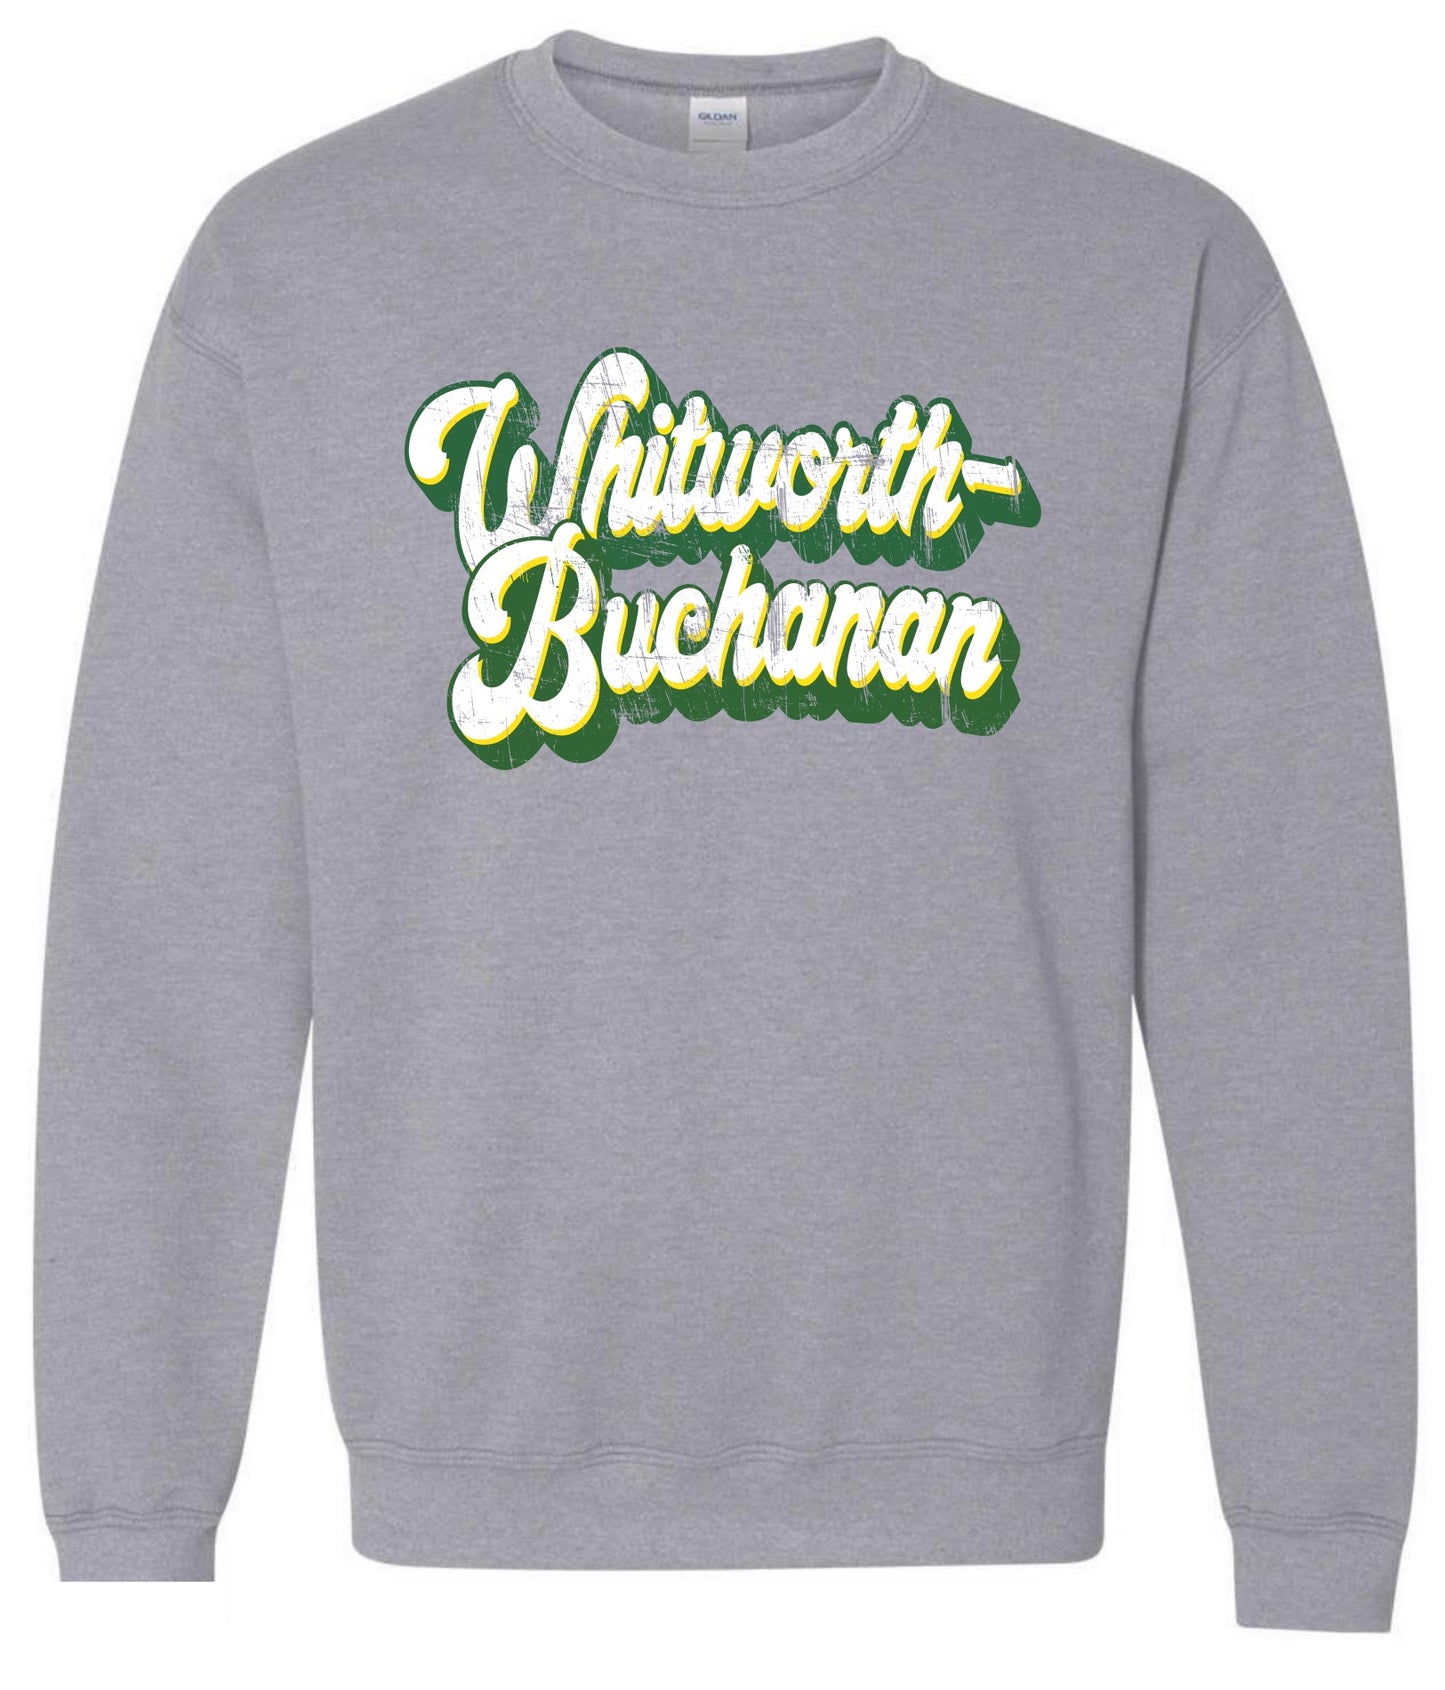 Whitworth-Buchanan Distressed Retro Sweatshirt